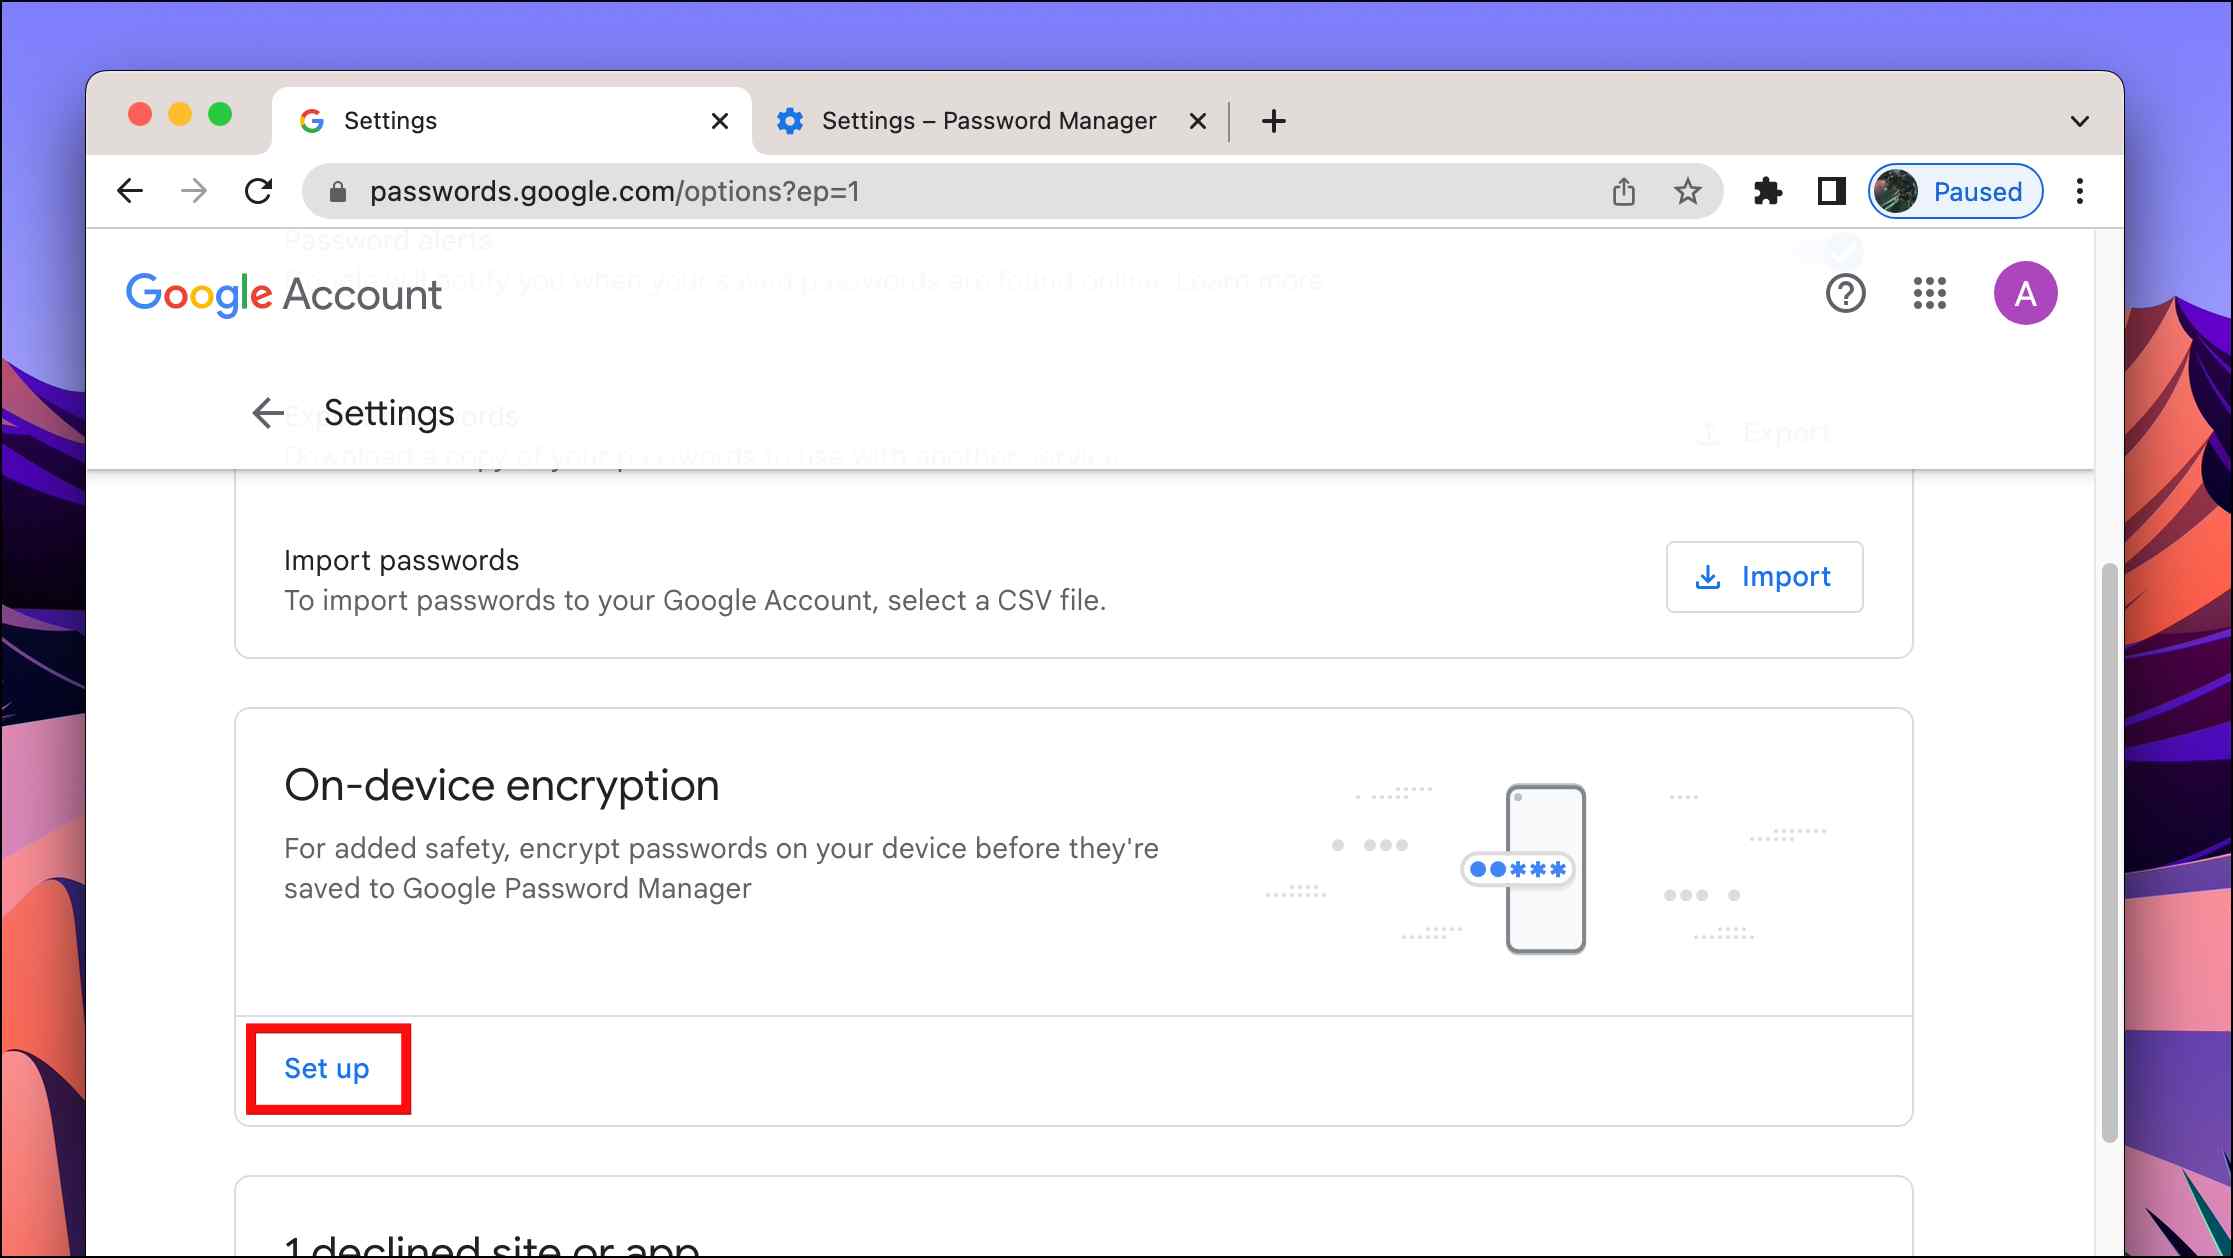 Google Passwords On Device Encryption PC